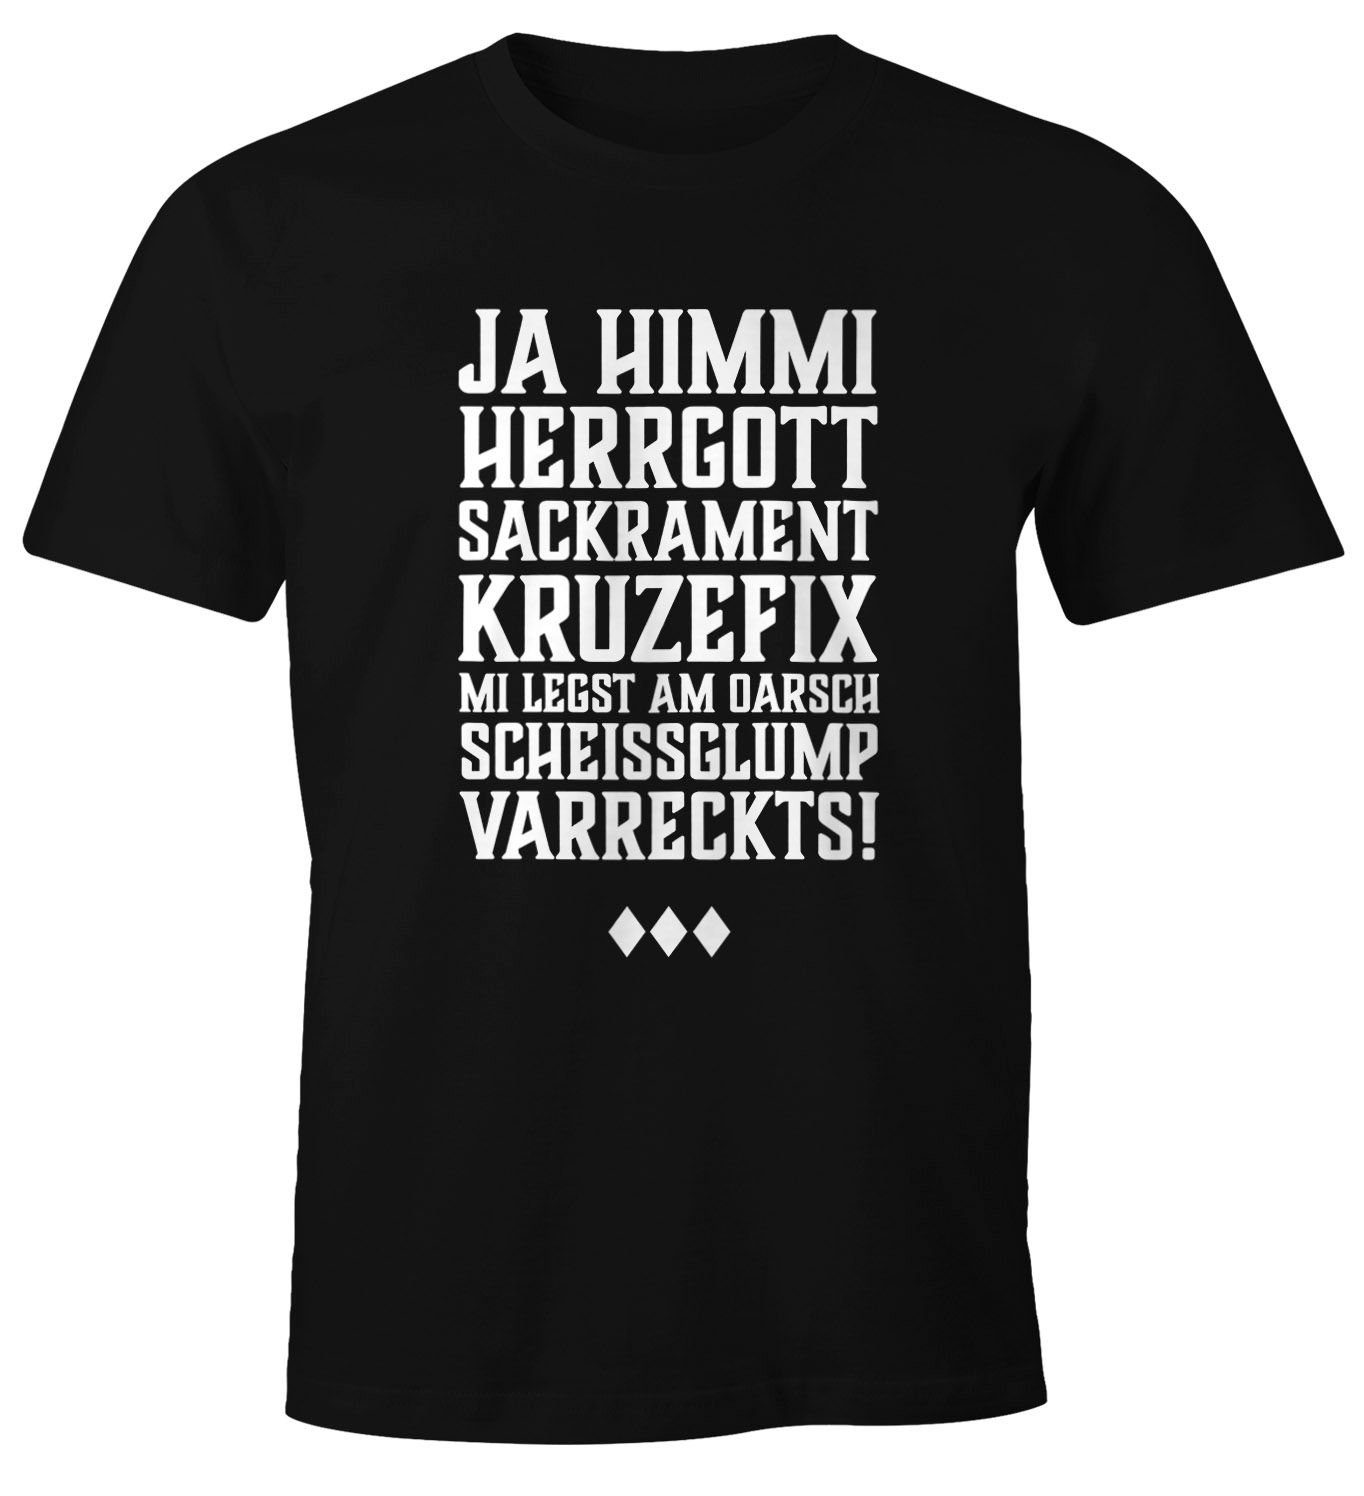 mit MoonWorks Moonworks® T-Shirt Fun-Shirt Print-Shirt Himmi Print Herrgott Sakrament Herren